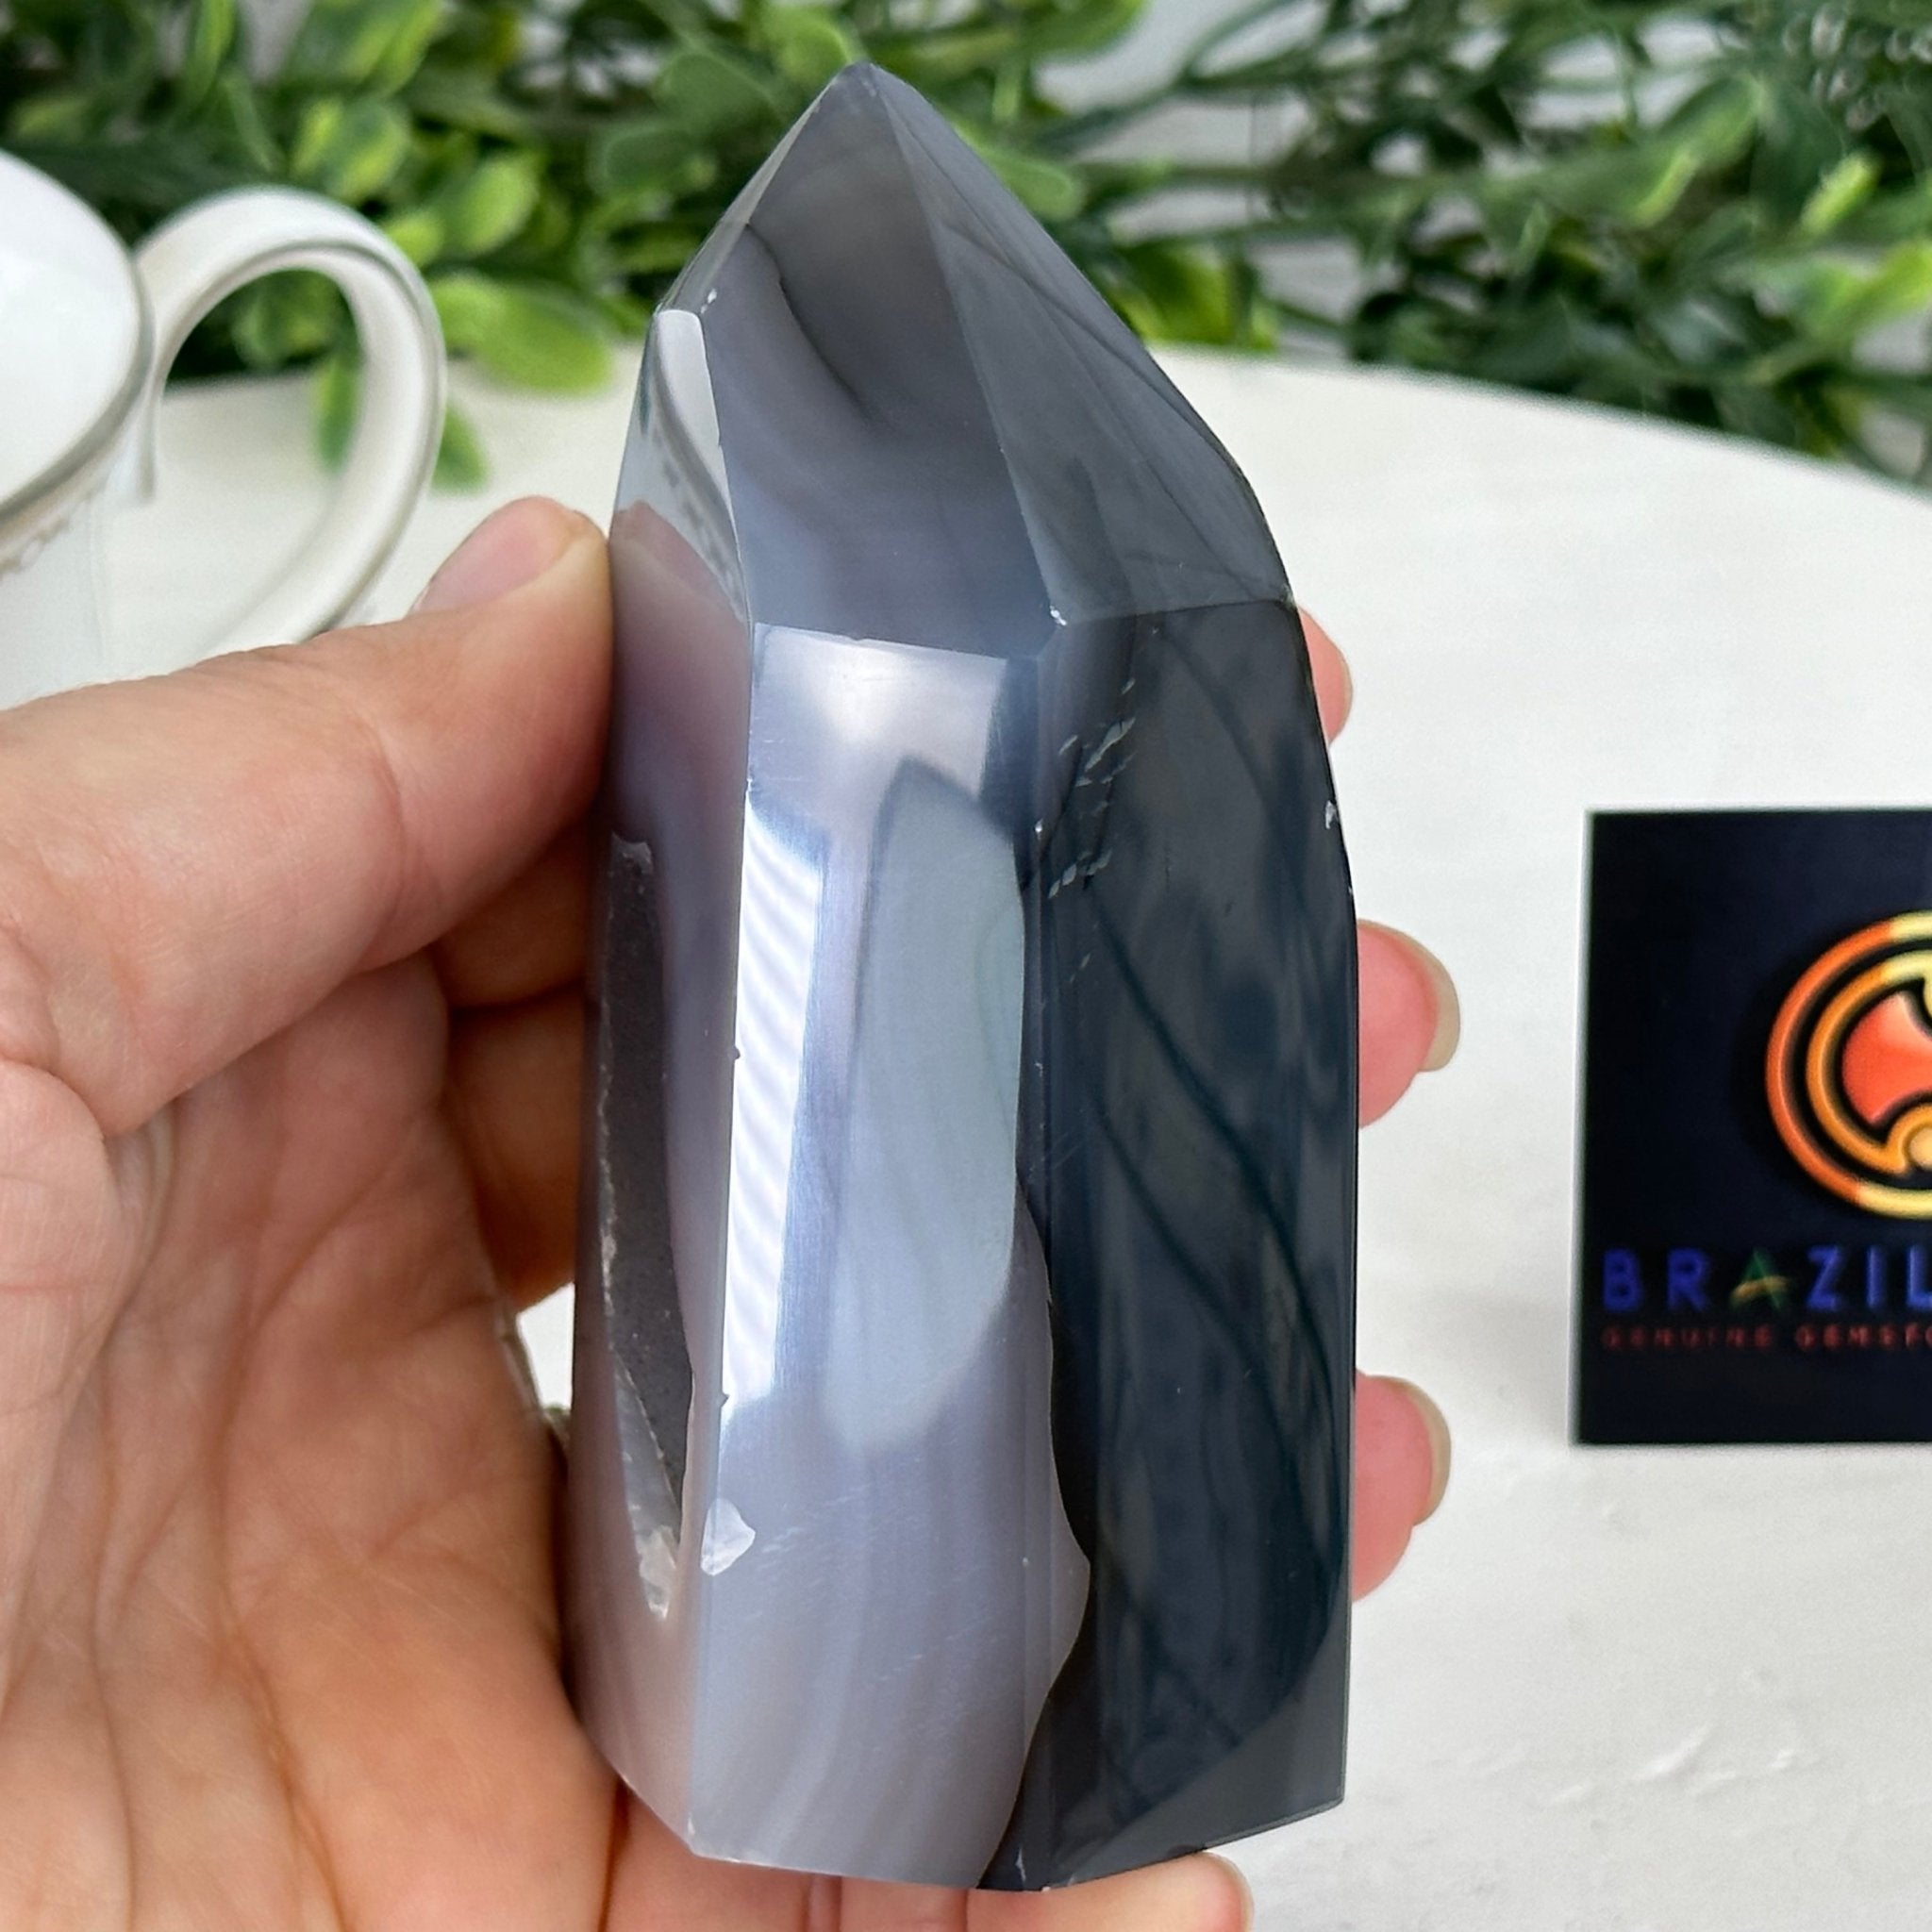 Polished Brazilian Drusy Agate Crystal Point, 0.87 lbs & 4" Tall, Model #3106NA-009 - Brazil GemsBrazil GemsPolished Brazilian Drusy Agate Crystal Point, 0.87 lbs & 4" Tall, Model #3106NA-009Crystal Points3106NA-009